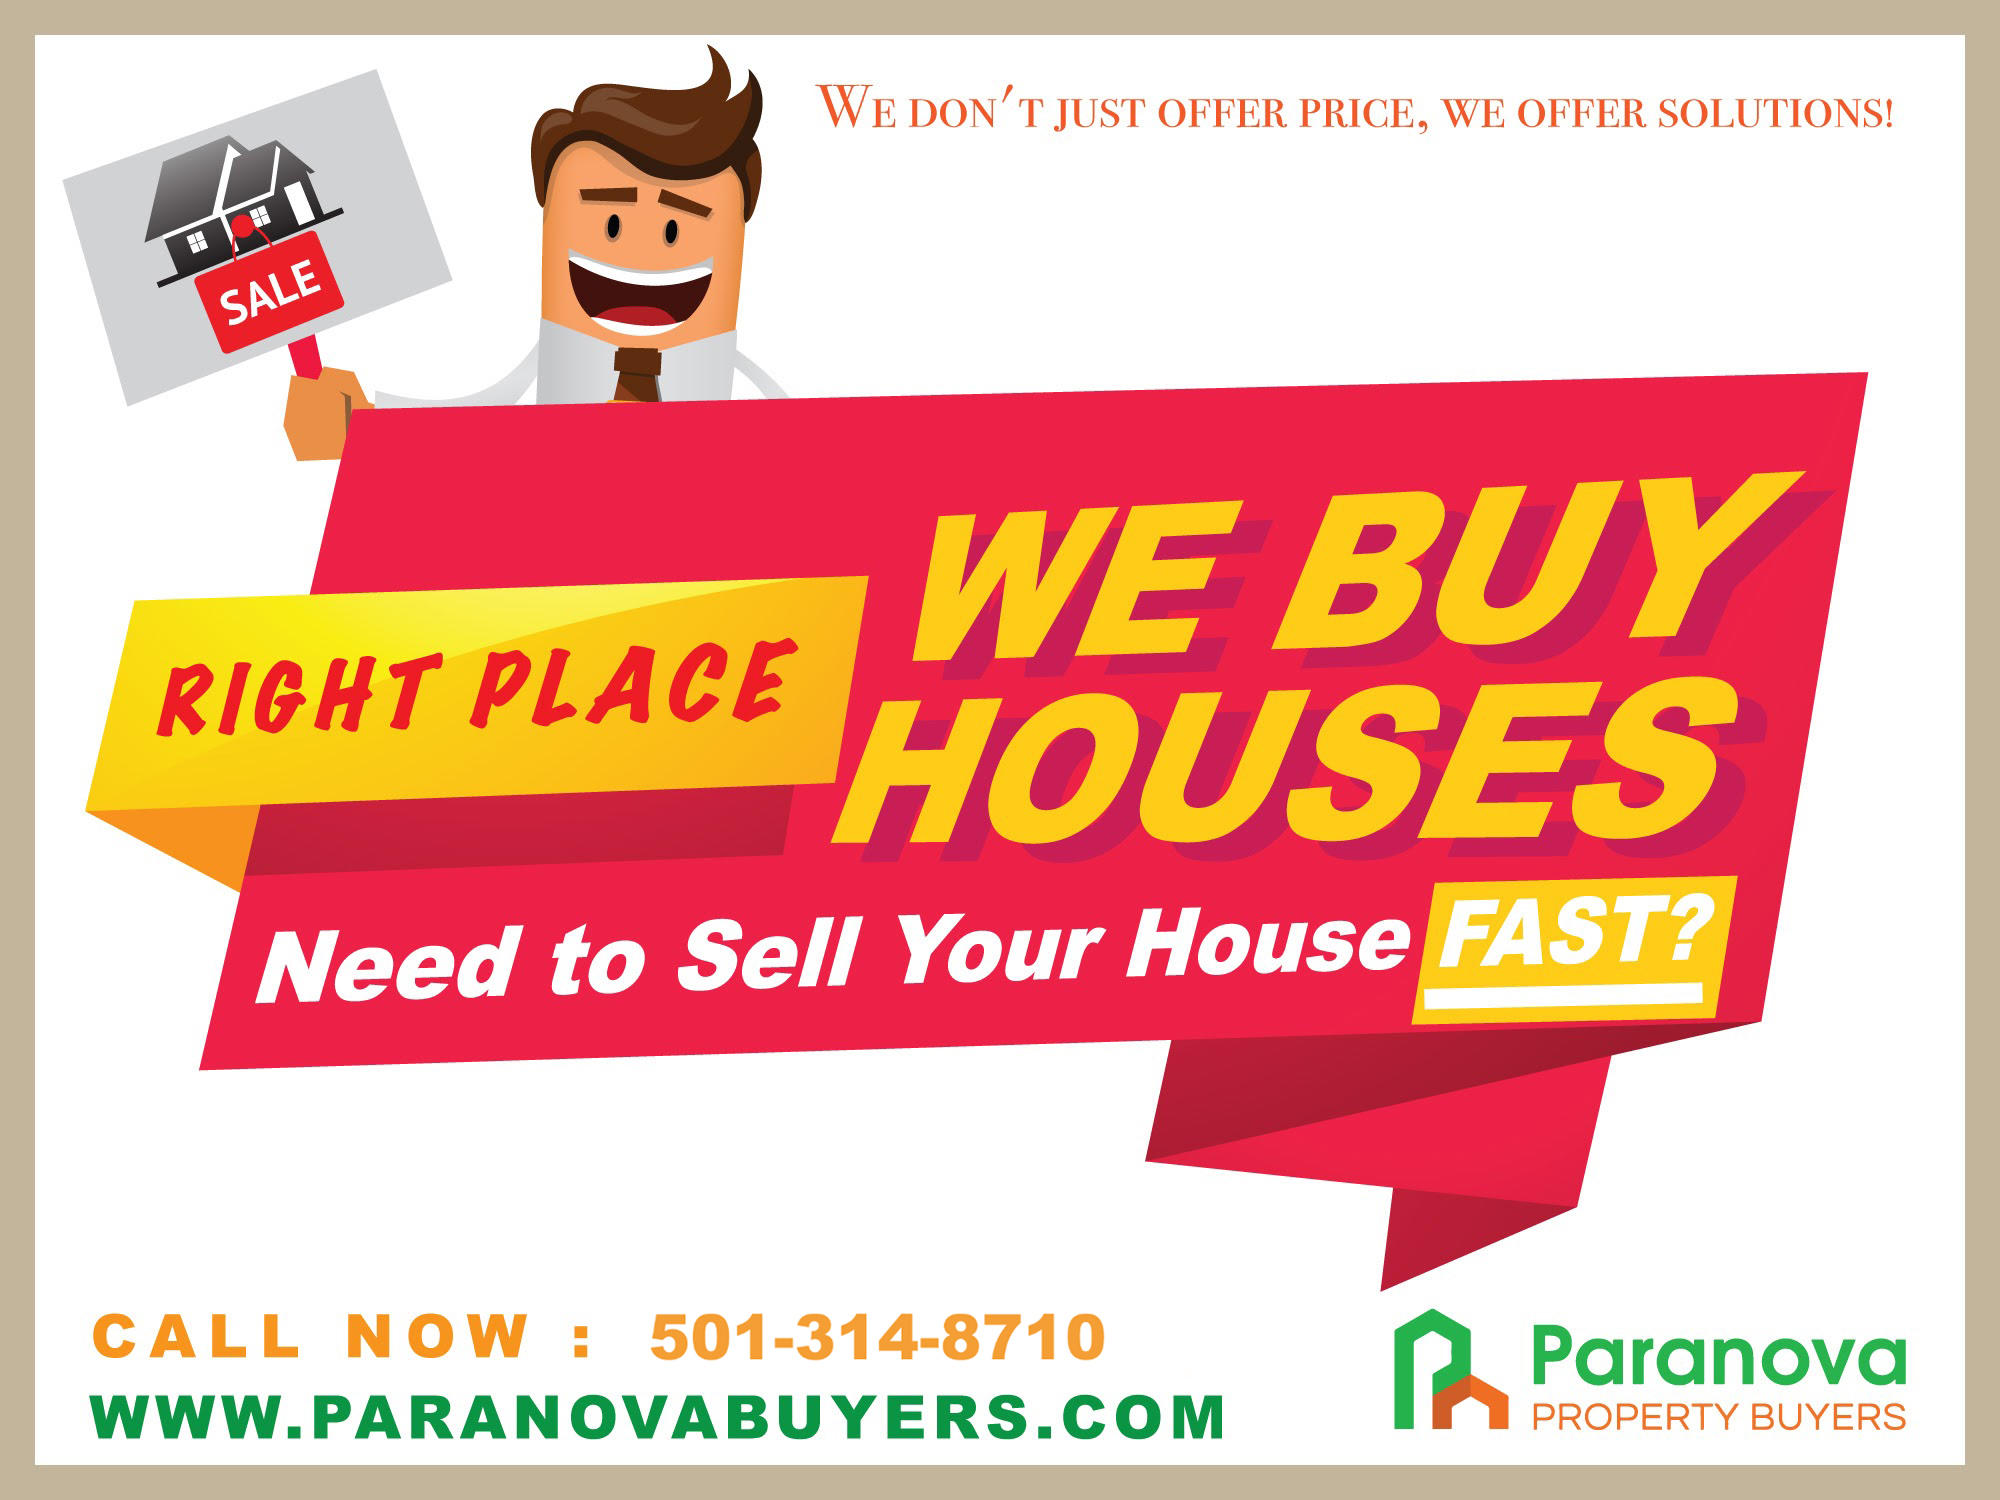 Paranova Property Buyers Photo